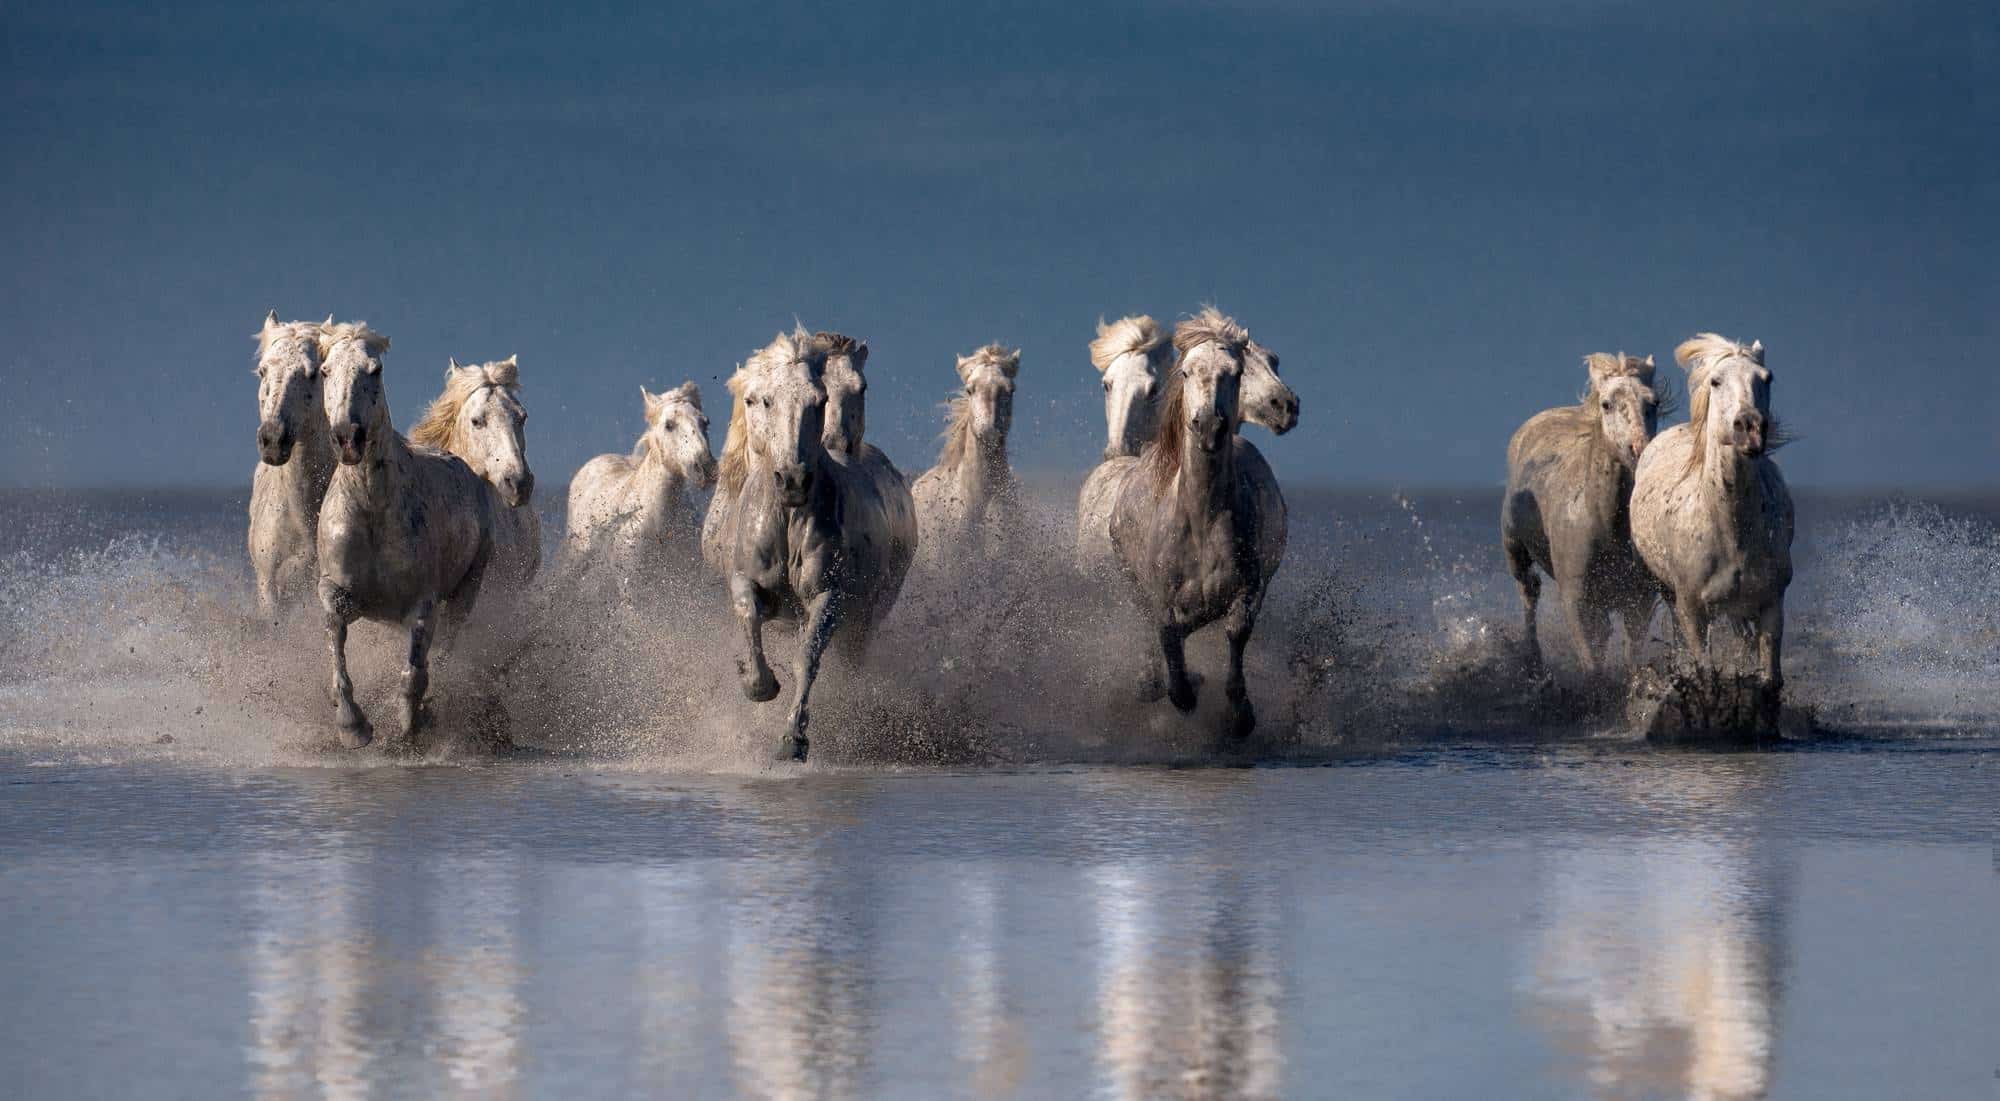 tilestwra.gr : spl474516 009 Λευκά άλογα φωτογραφίζονται να τρέχουν στη θάλασσα! Η αίσθηση της ελευθερίας στο αποκορύφωμά της…